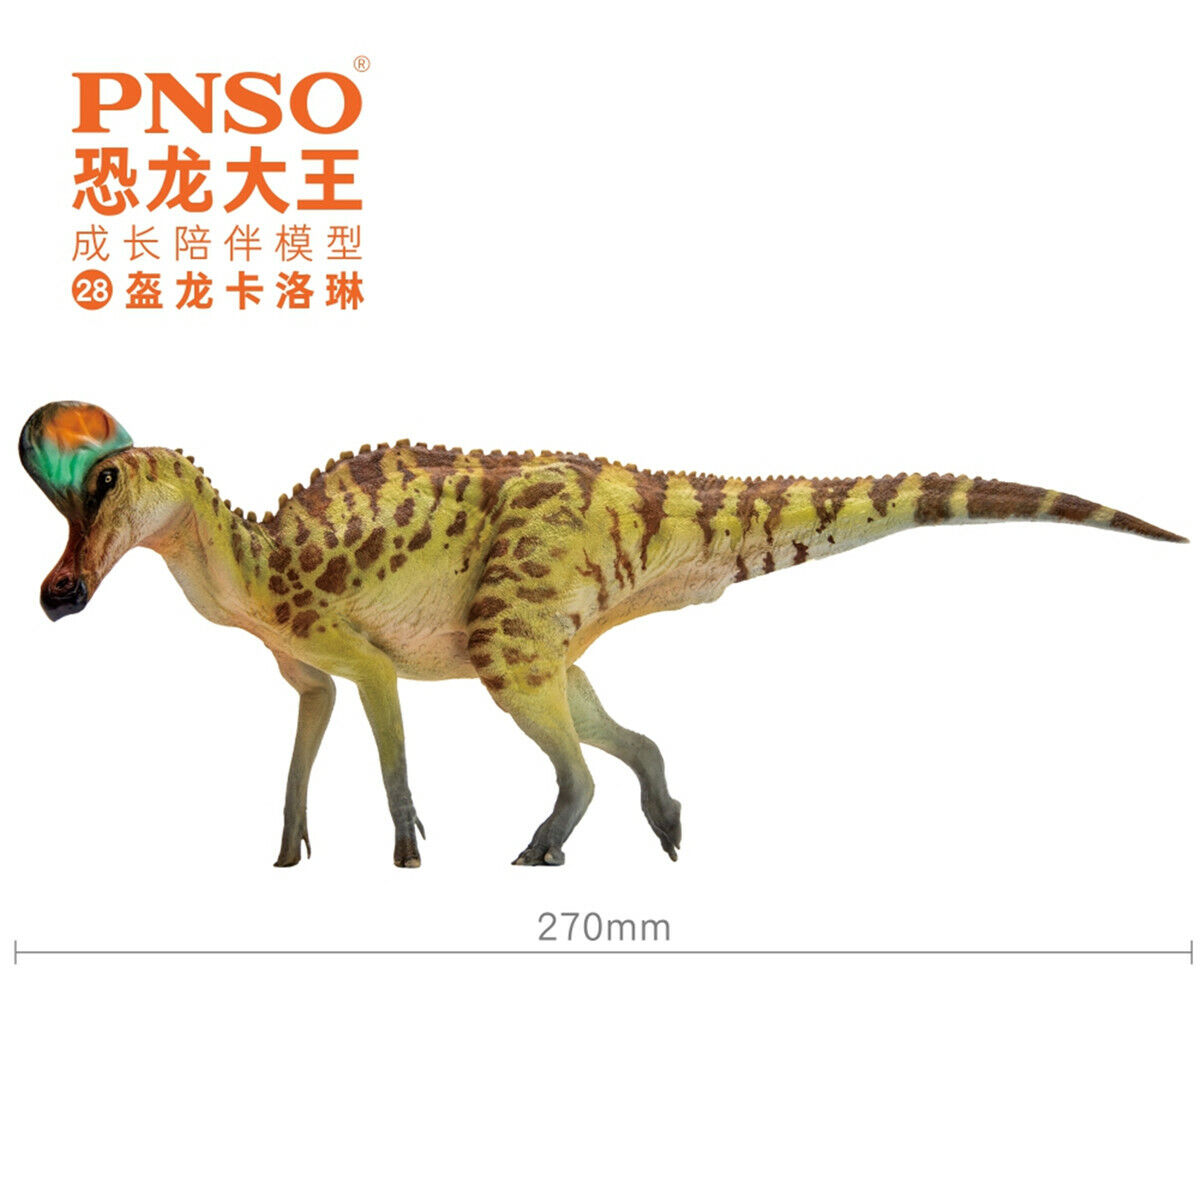 PNSO Corythosaurus Model Hadrosauridae Dinosaur Collection Animal Decor Gift Toy